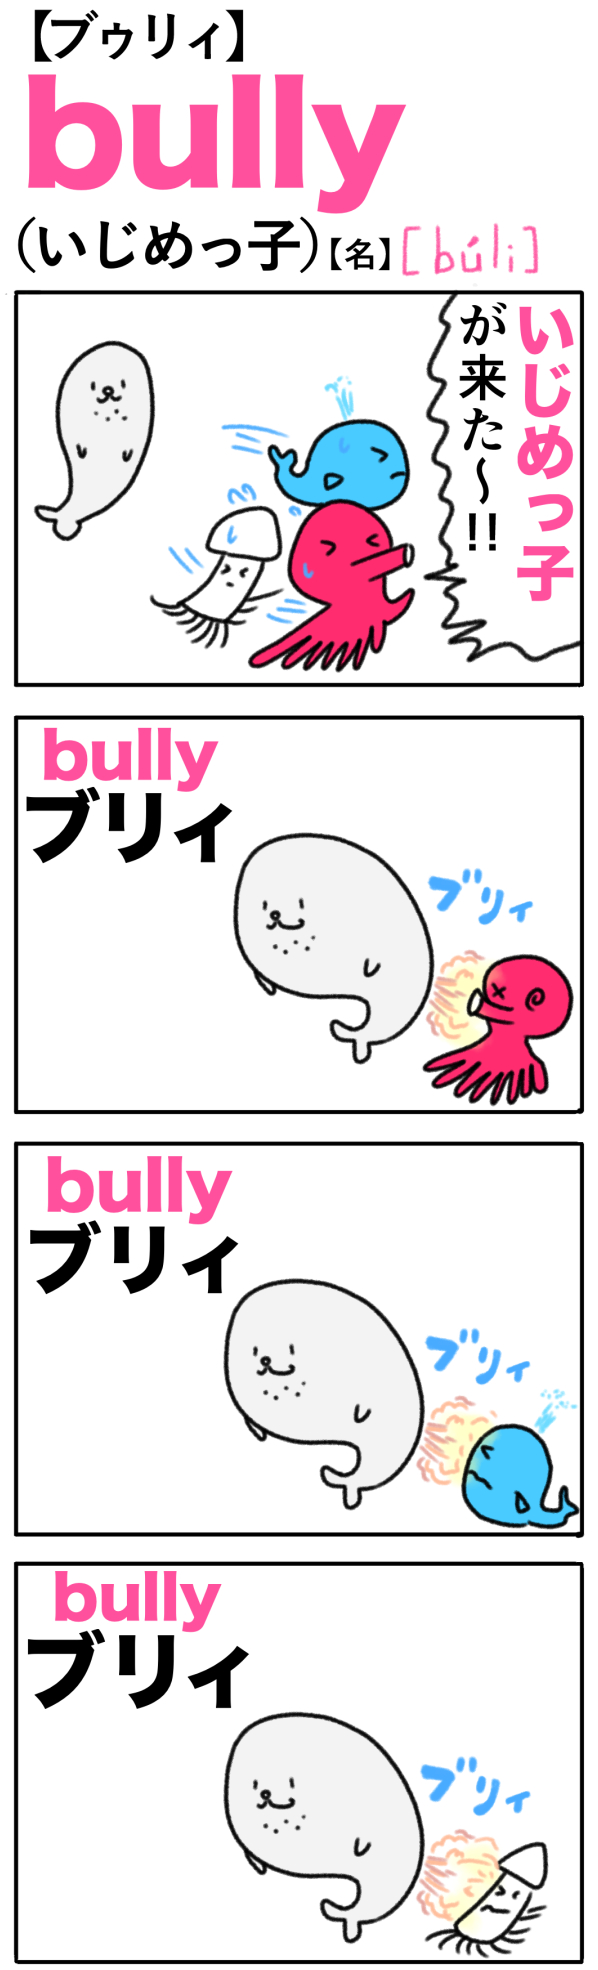 bully（いじめっ子）の語呂合わせ英単語